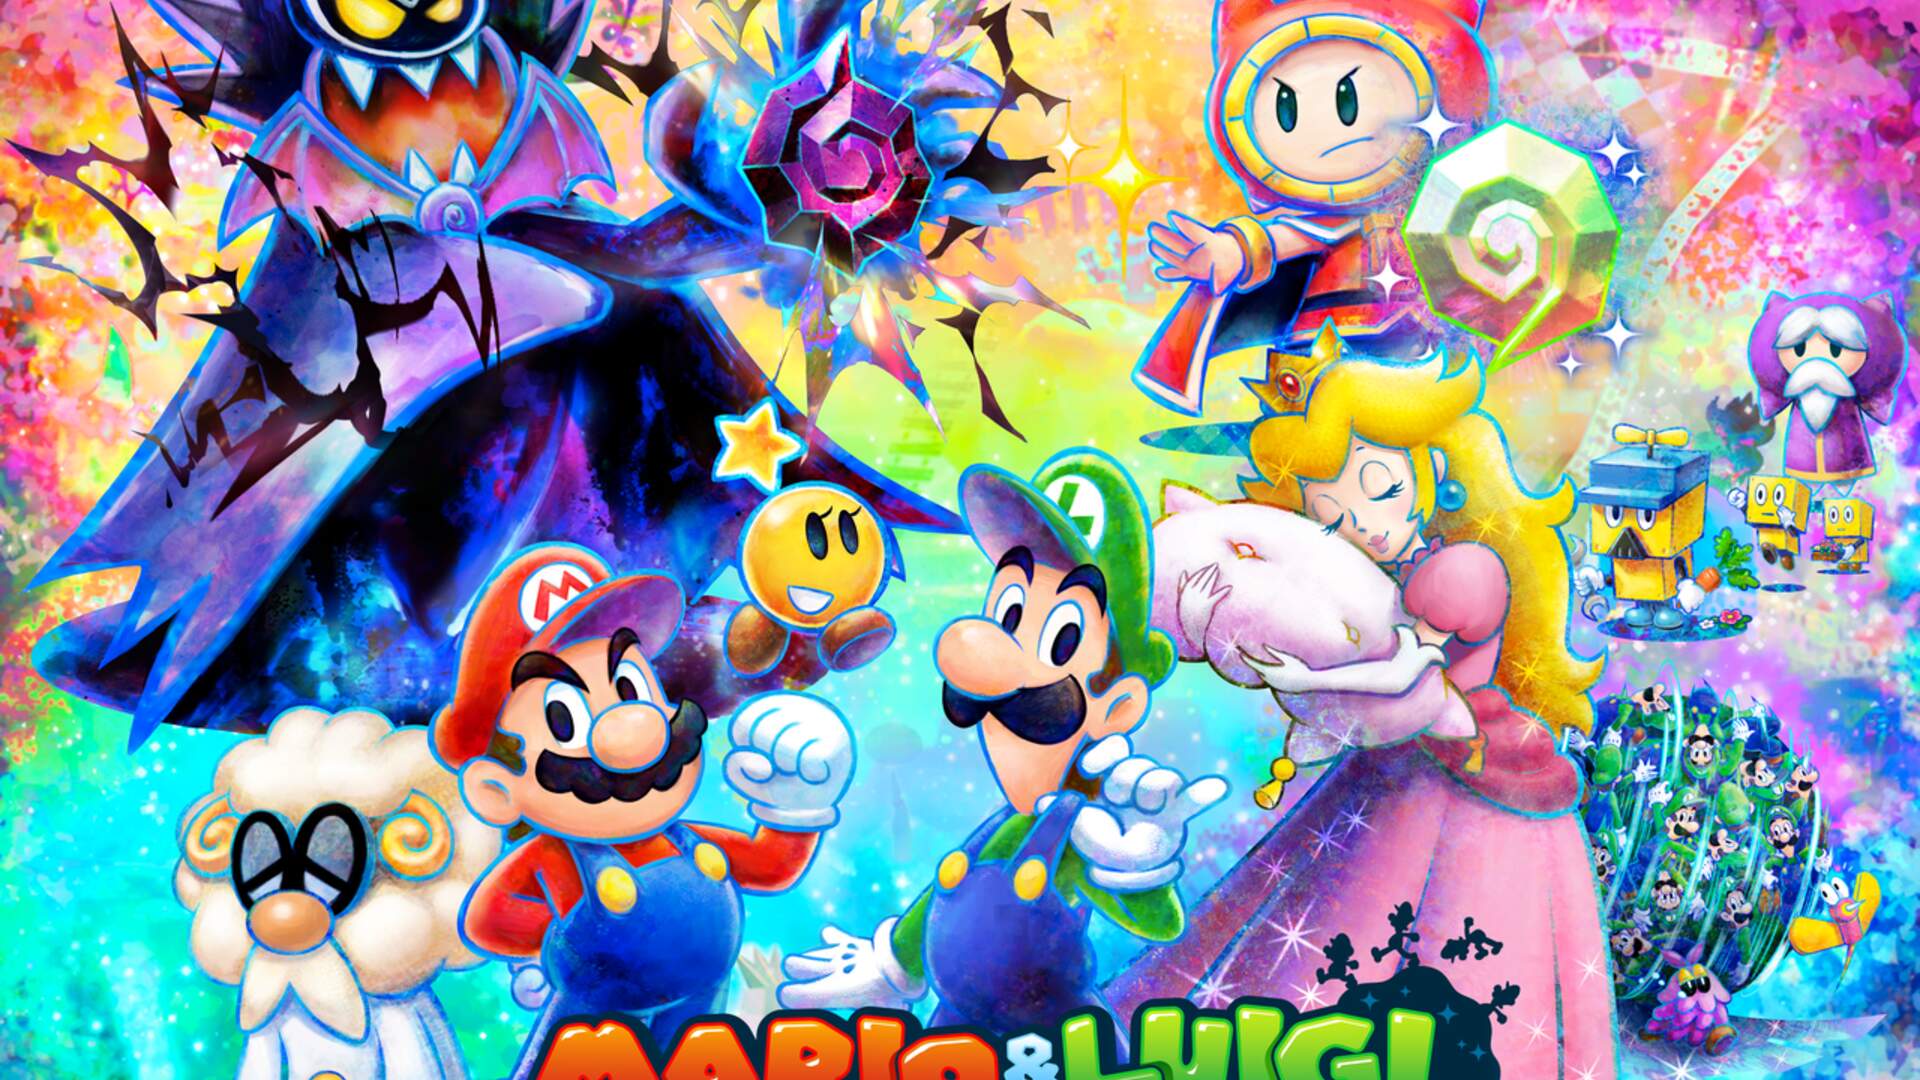 USGamer Interviews the Developers of Mario & Luigi, Dream Team